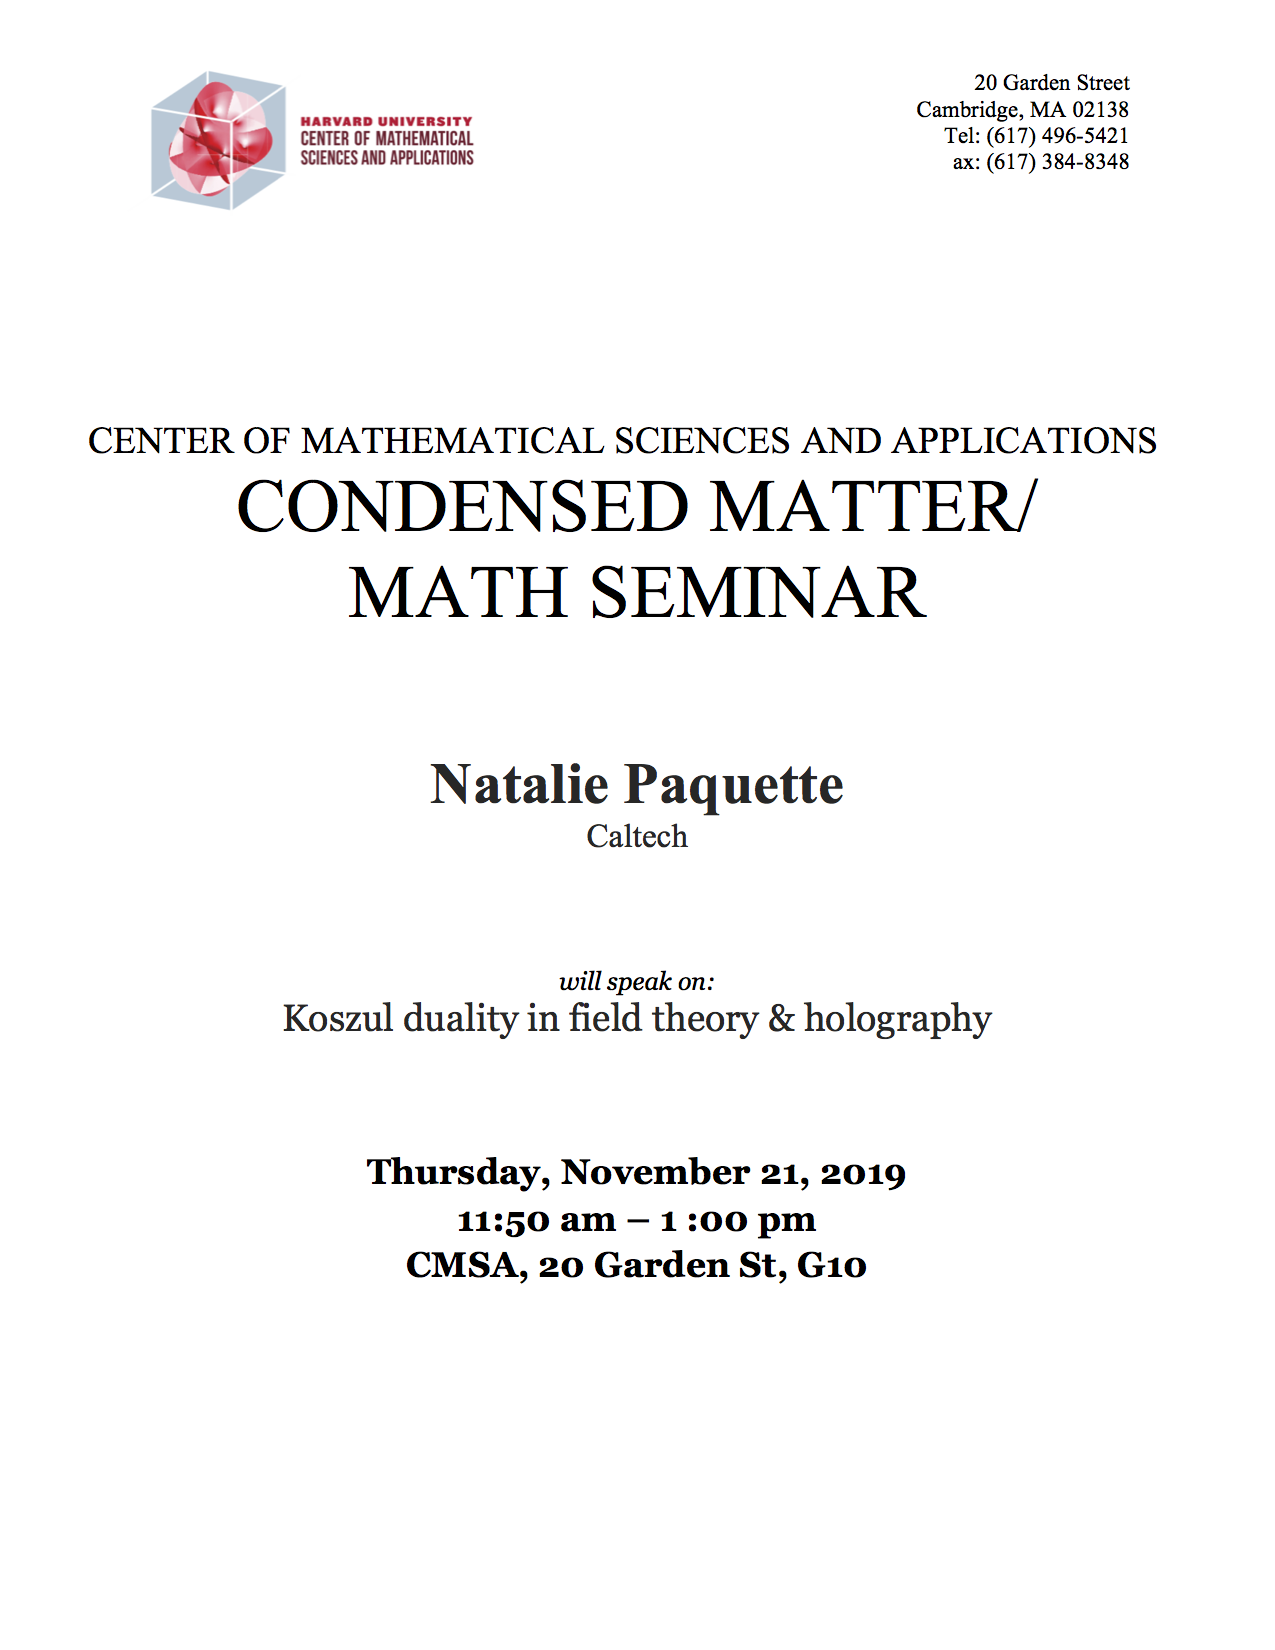 11/21/2019 Condensed Matter seminar